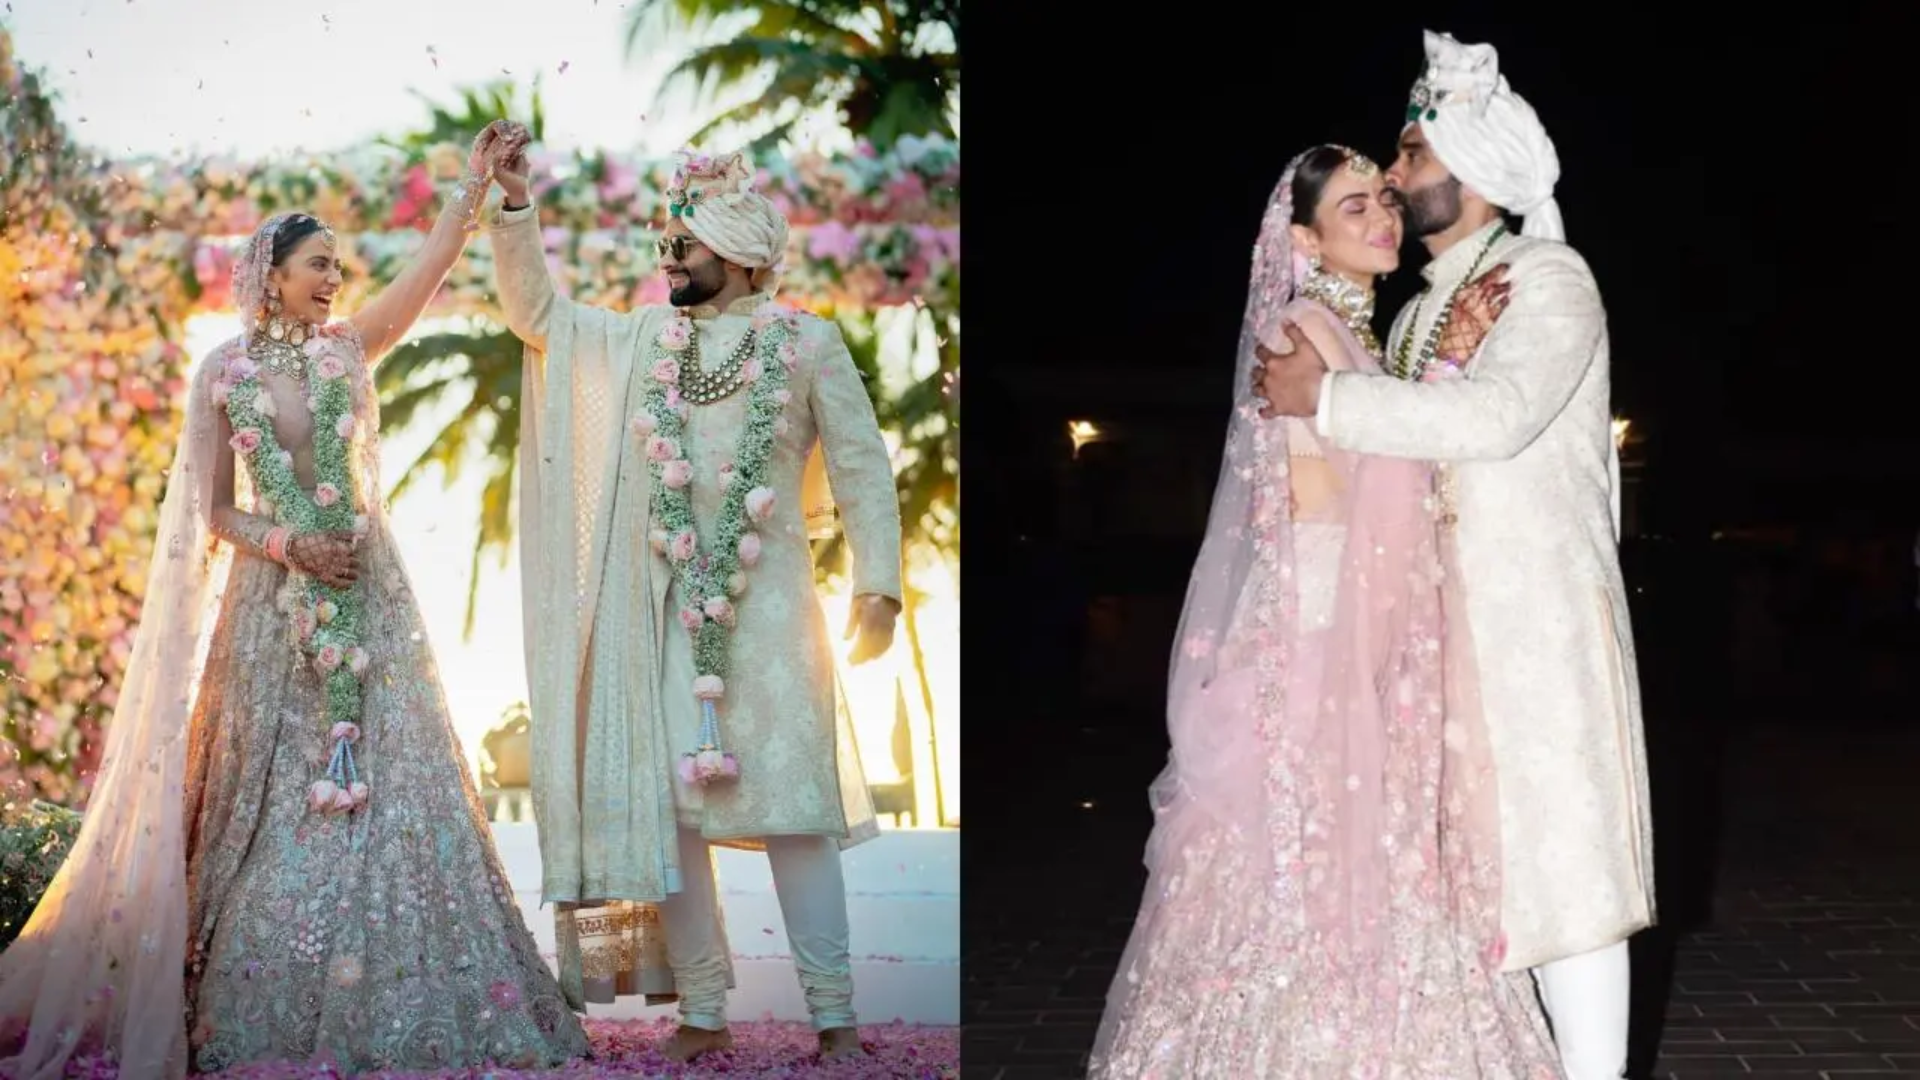 Checkout Rakul Preet Singh and Jackky Bhagnani’s Wedding Look